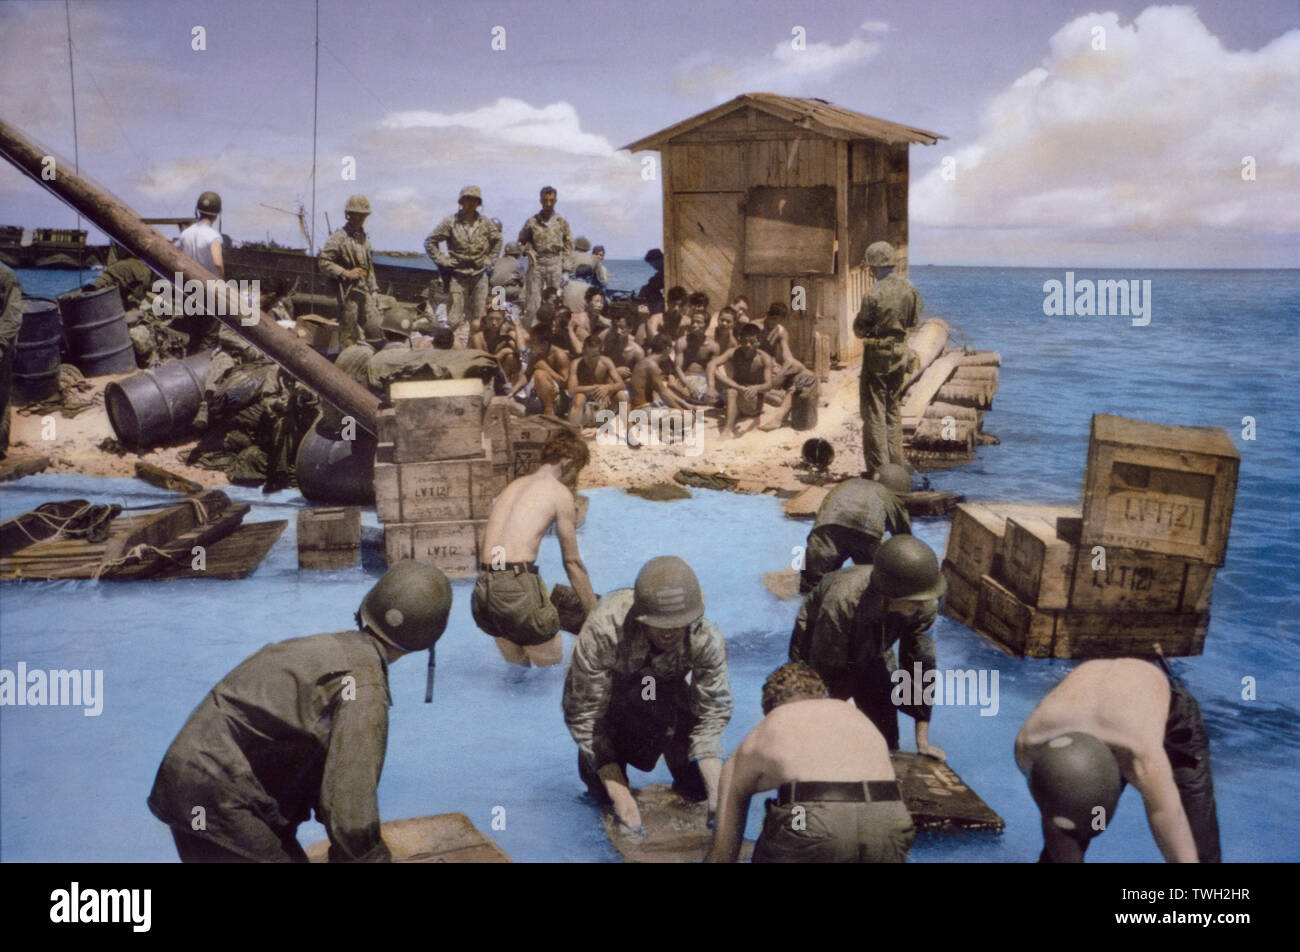 U.S. Marines with Captured Japanese Soldiers and Supplies, Battle of Tarawa, Tarawa Atoll, Gilbert Islands, November 1943 Stock Photo